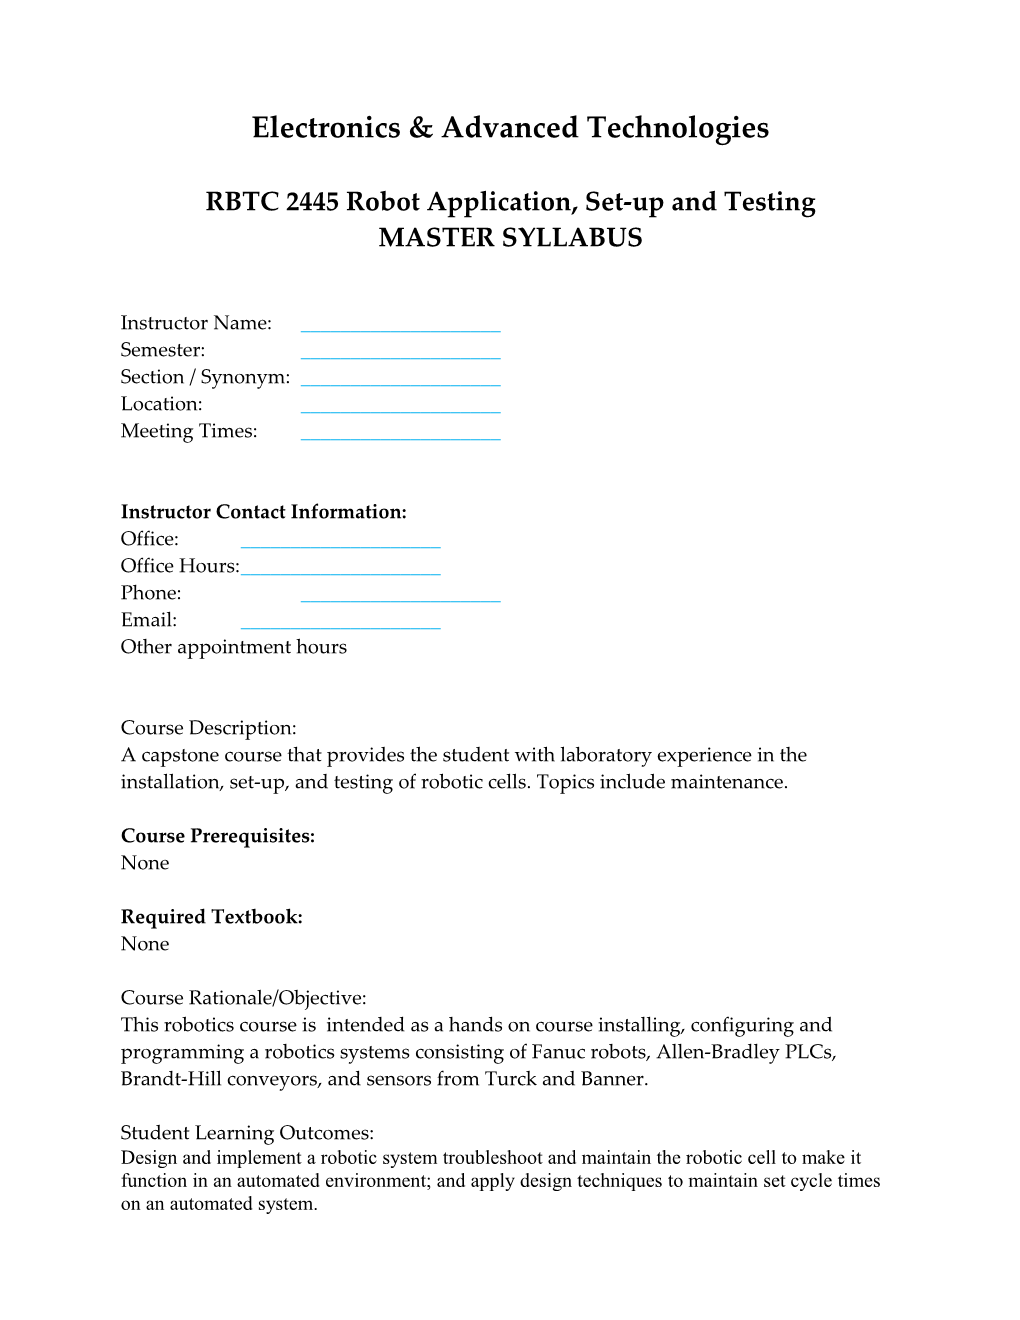 RBTC 2445 Robot Application, Set-Up, and Testing